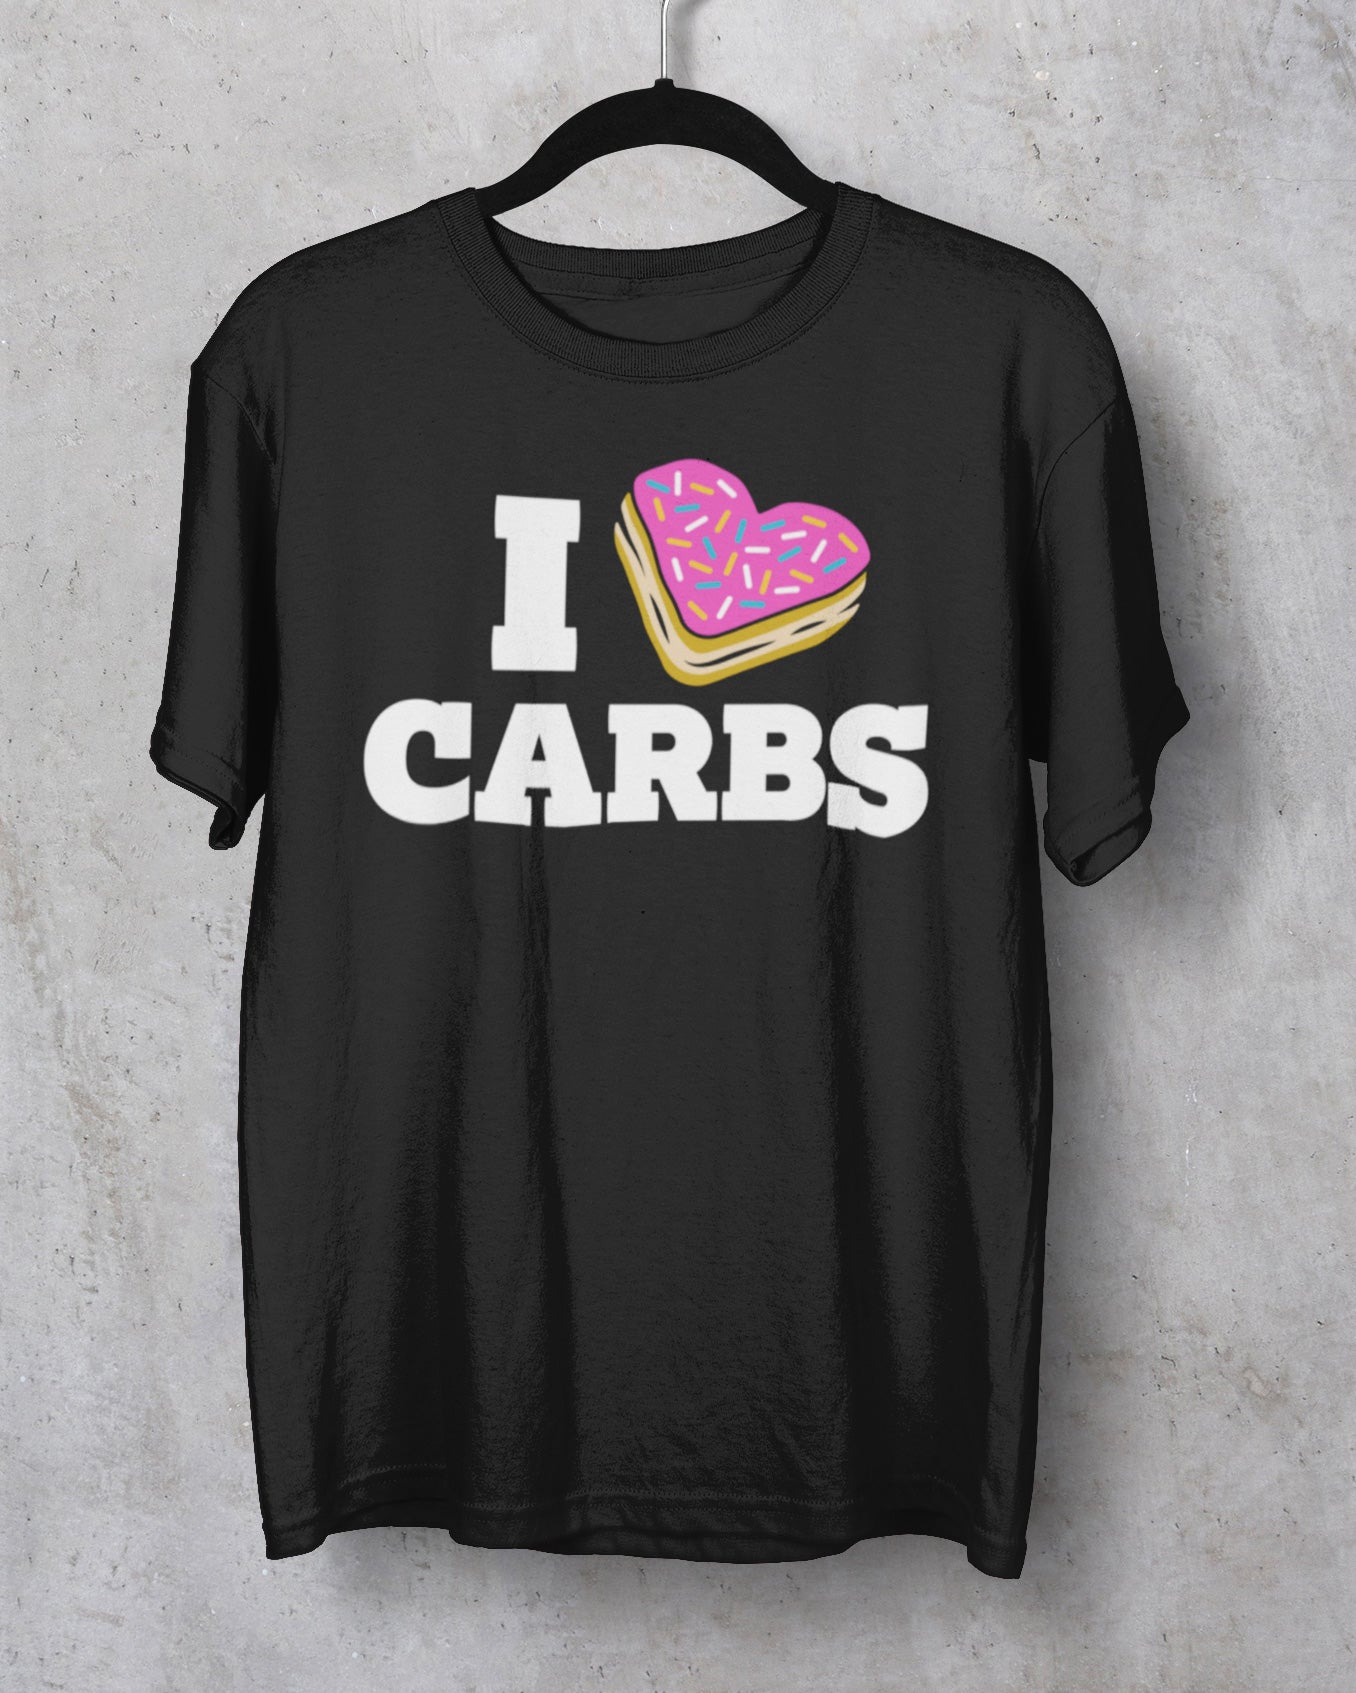 I <3 Carbs T-Shirt